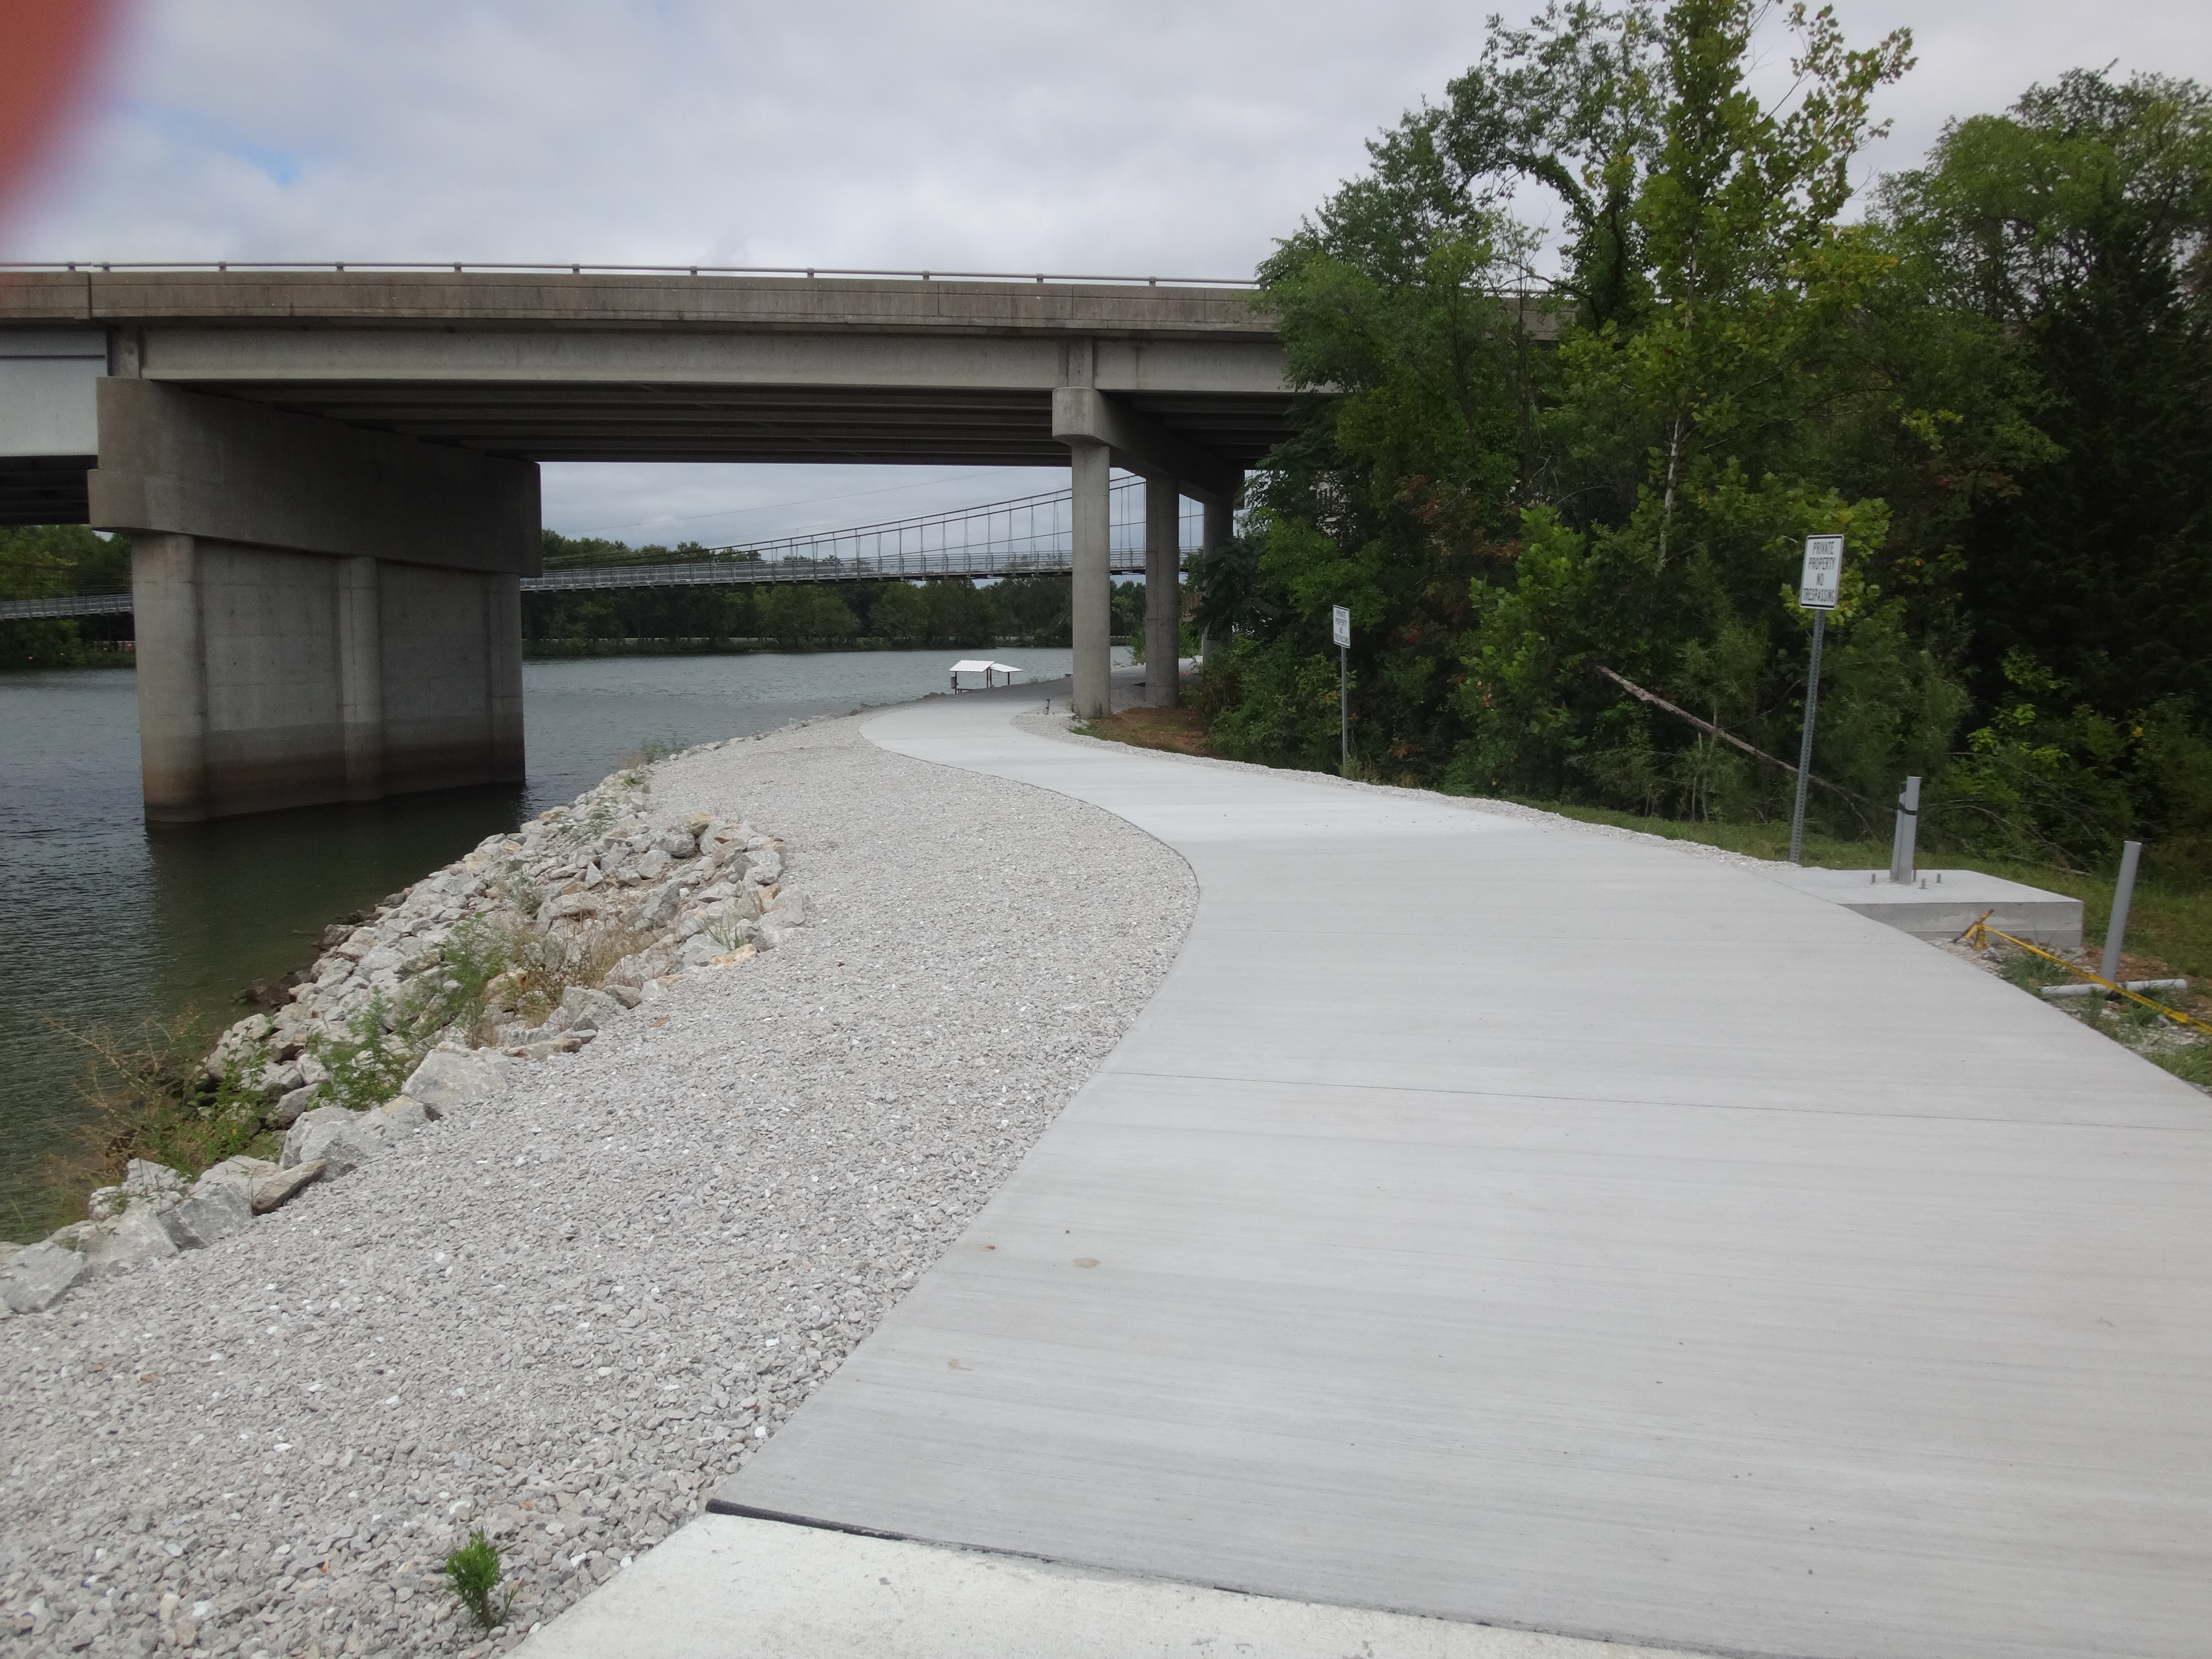 a concrete trail going under an overpass